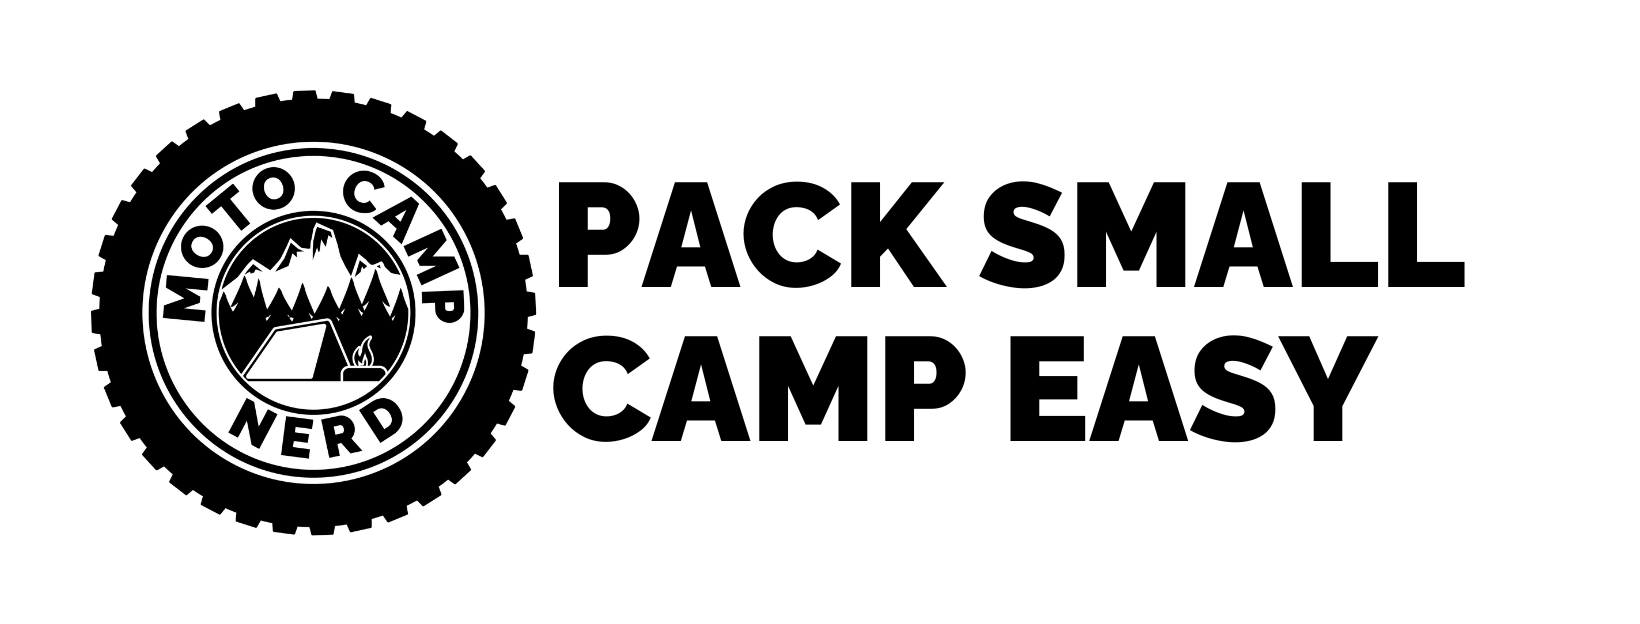 moto-camp-nerd logo